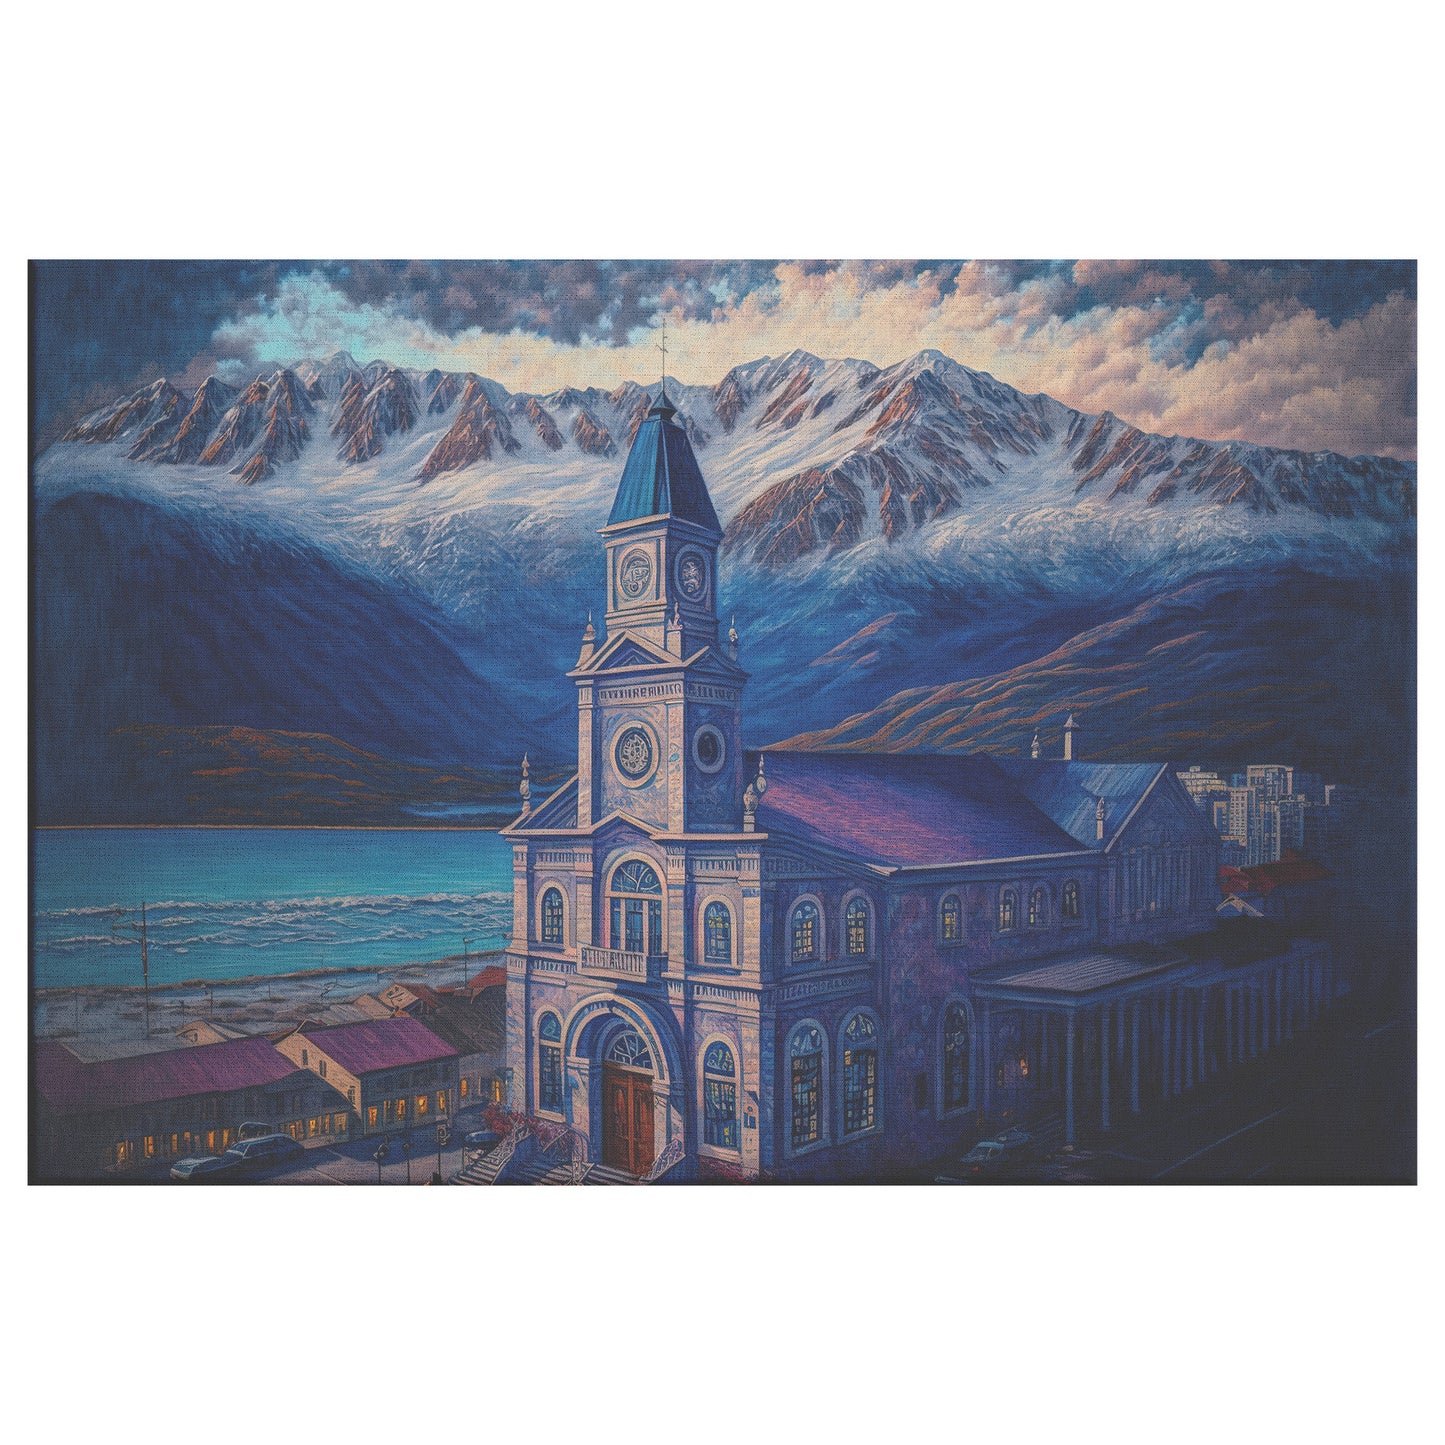 Patagonia Landscape Print, Ushuaia Patagonia Mountains and Coast Painting, Midjourney AI Art